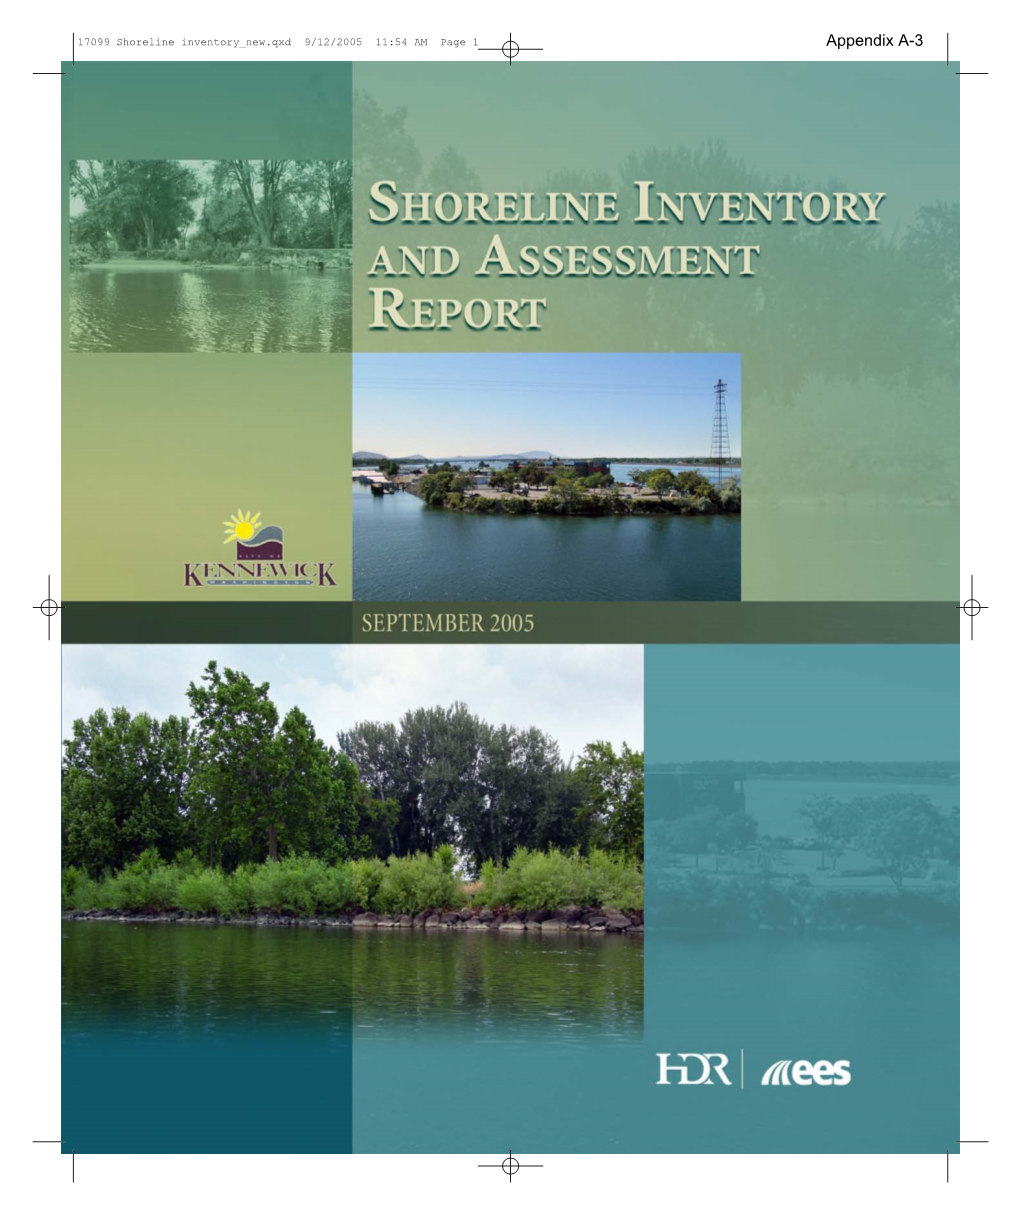 Appendix A-3 Shoreline Inventory & Assessment Report